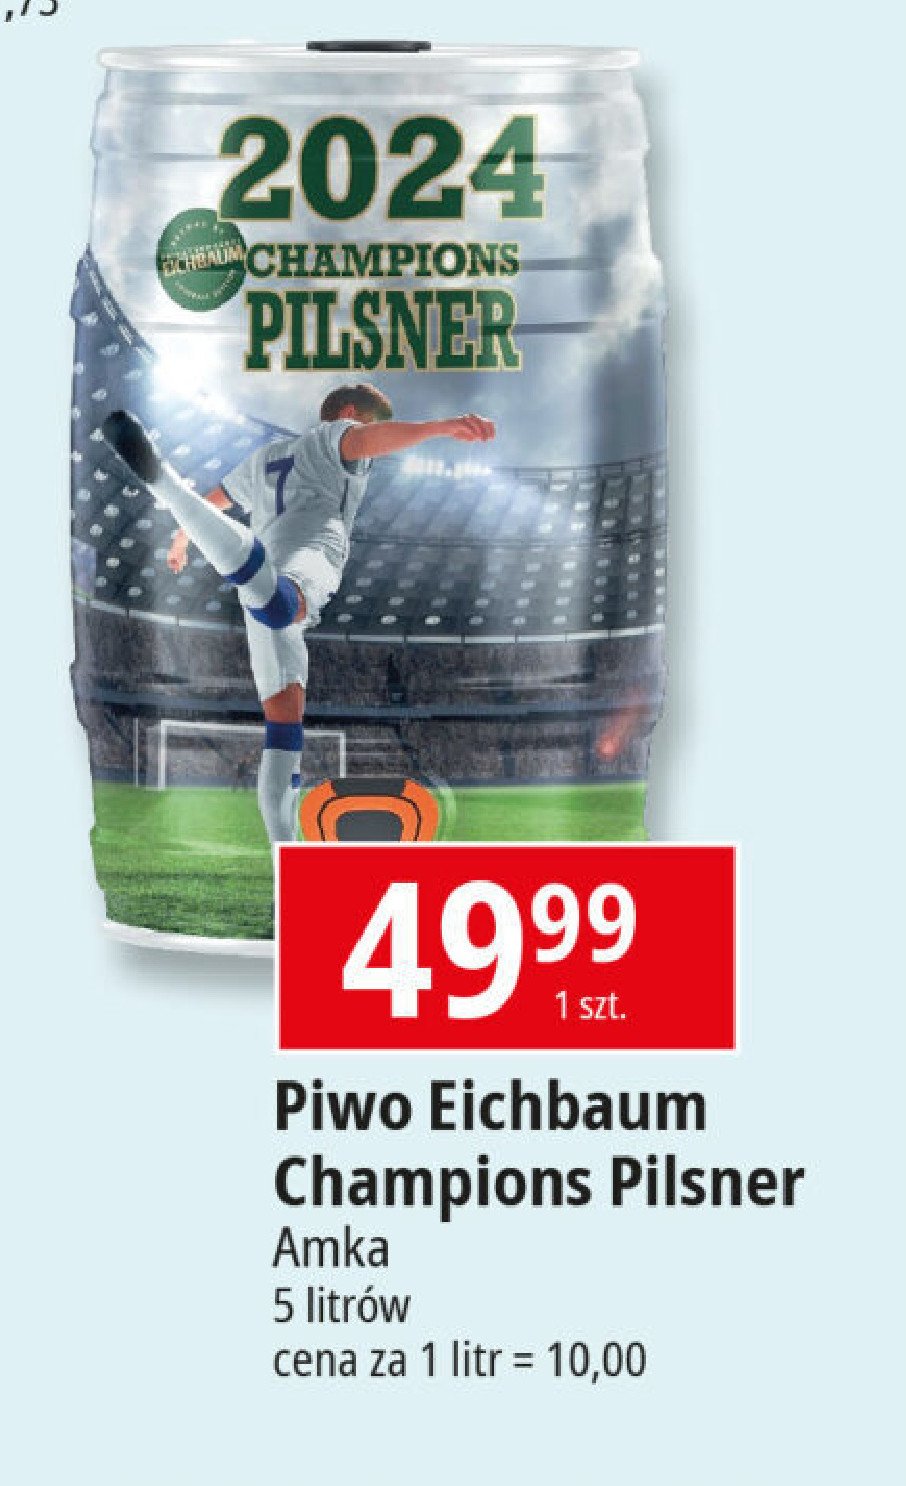 Piwo Eichbaum pilsner promocja